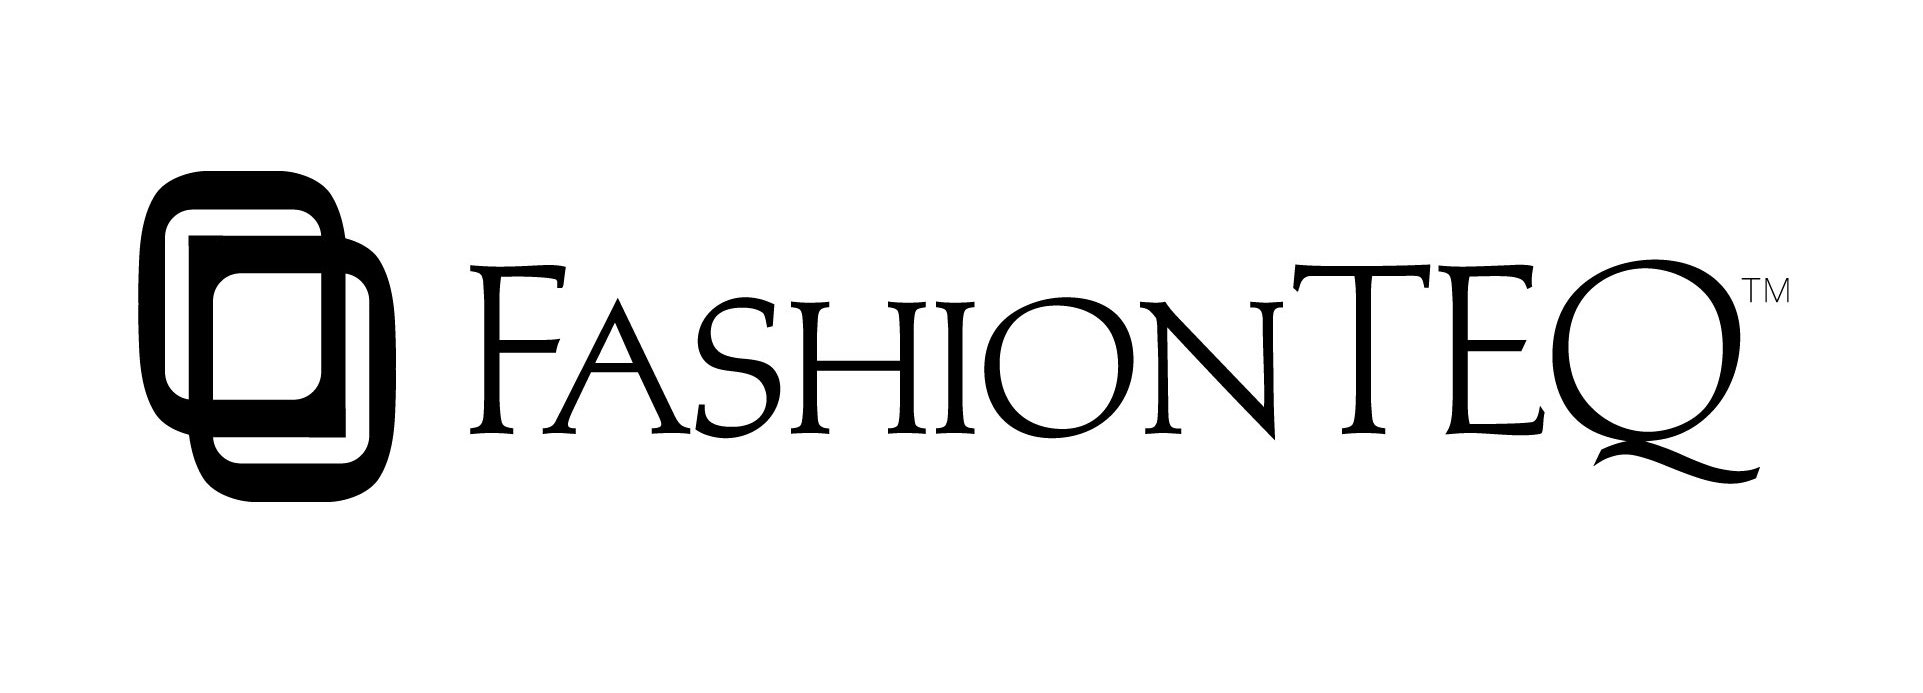 FashionTeq logo